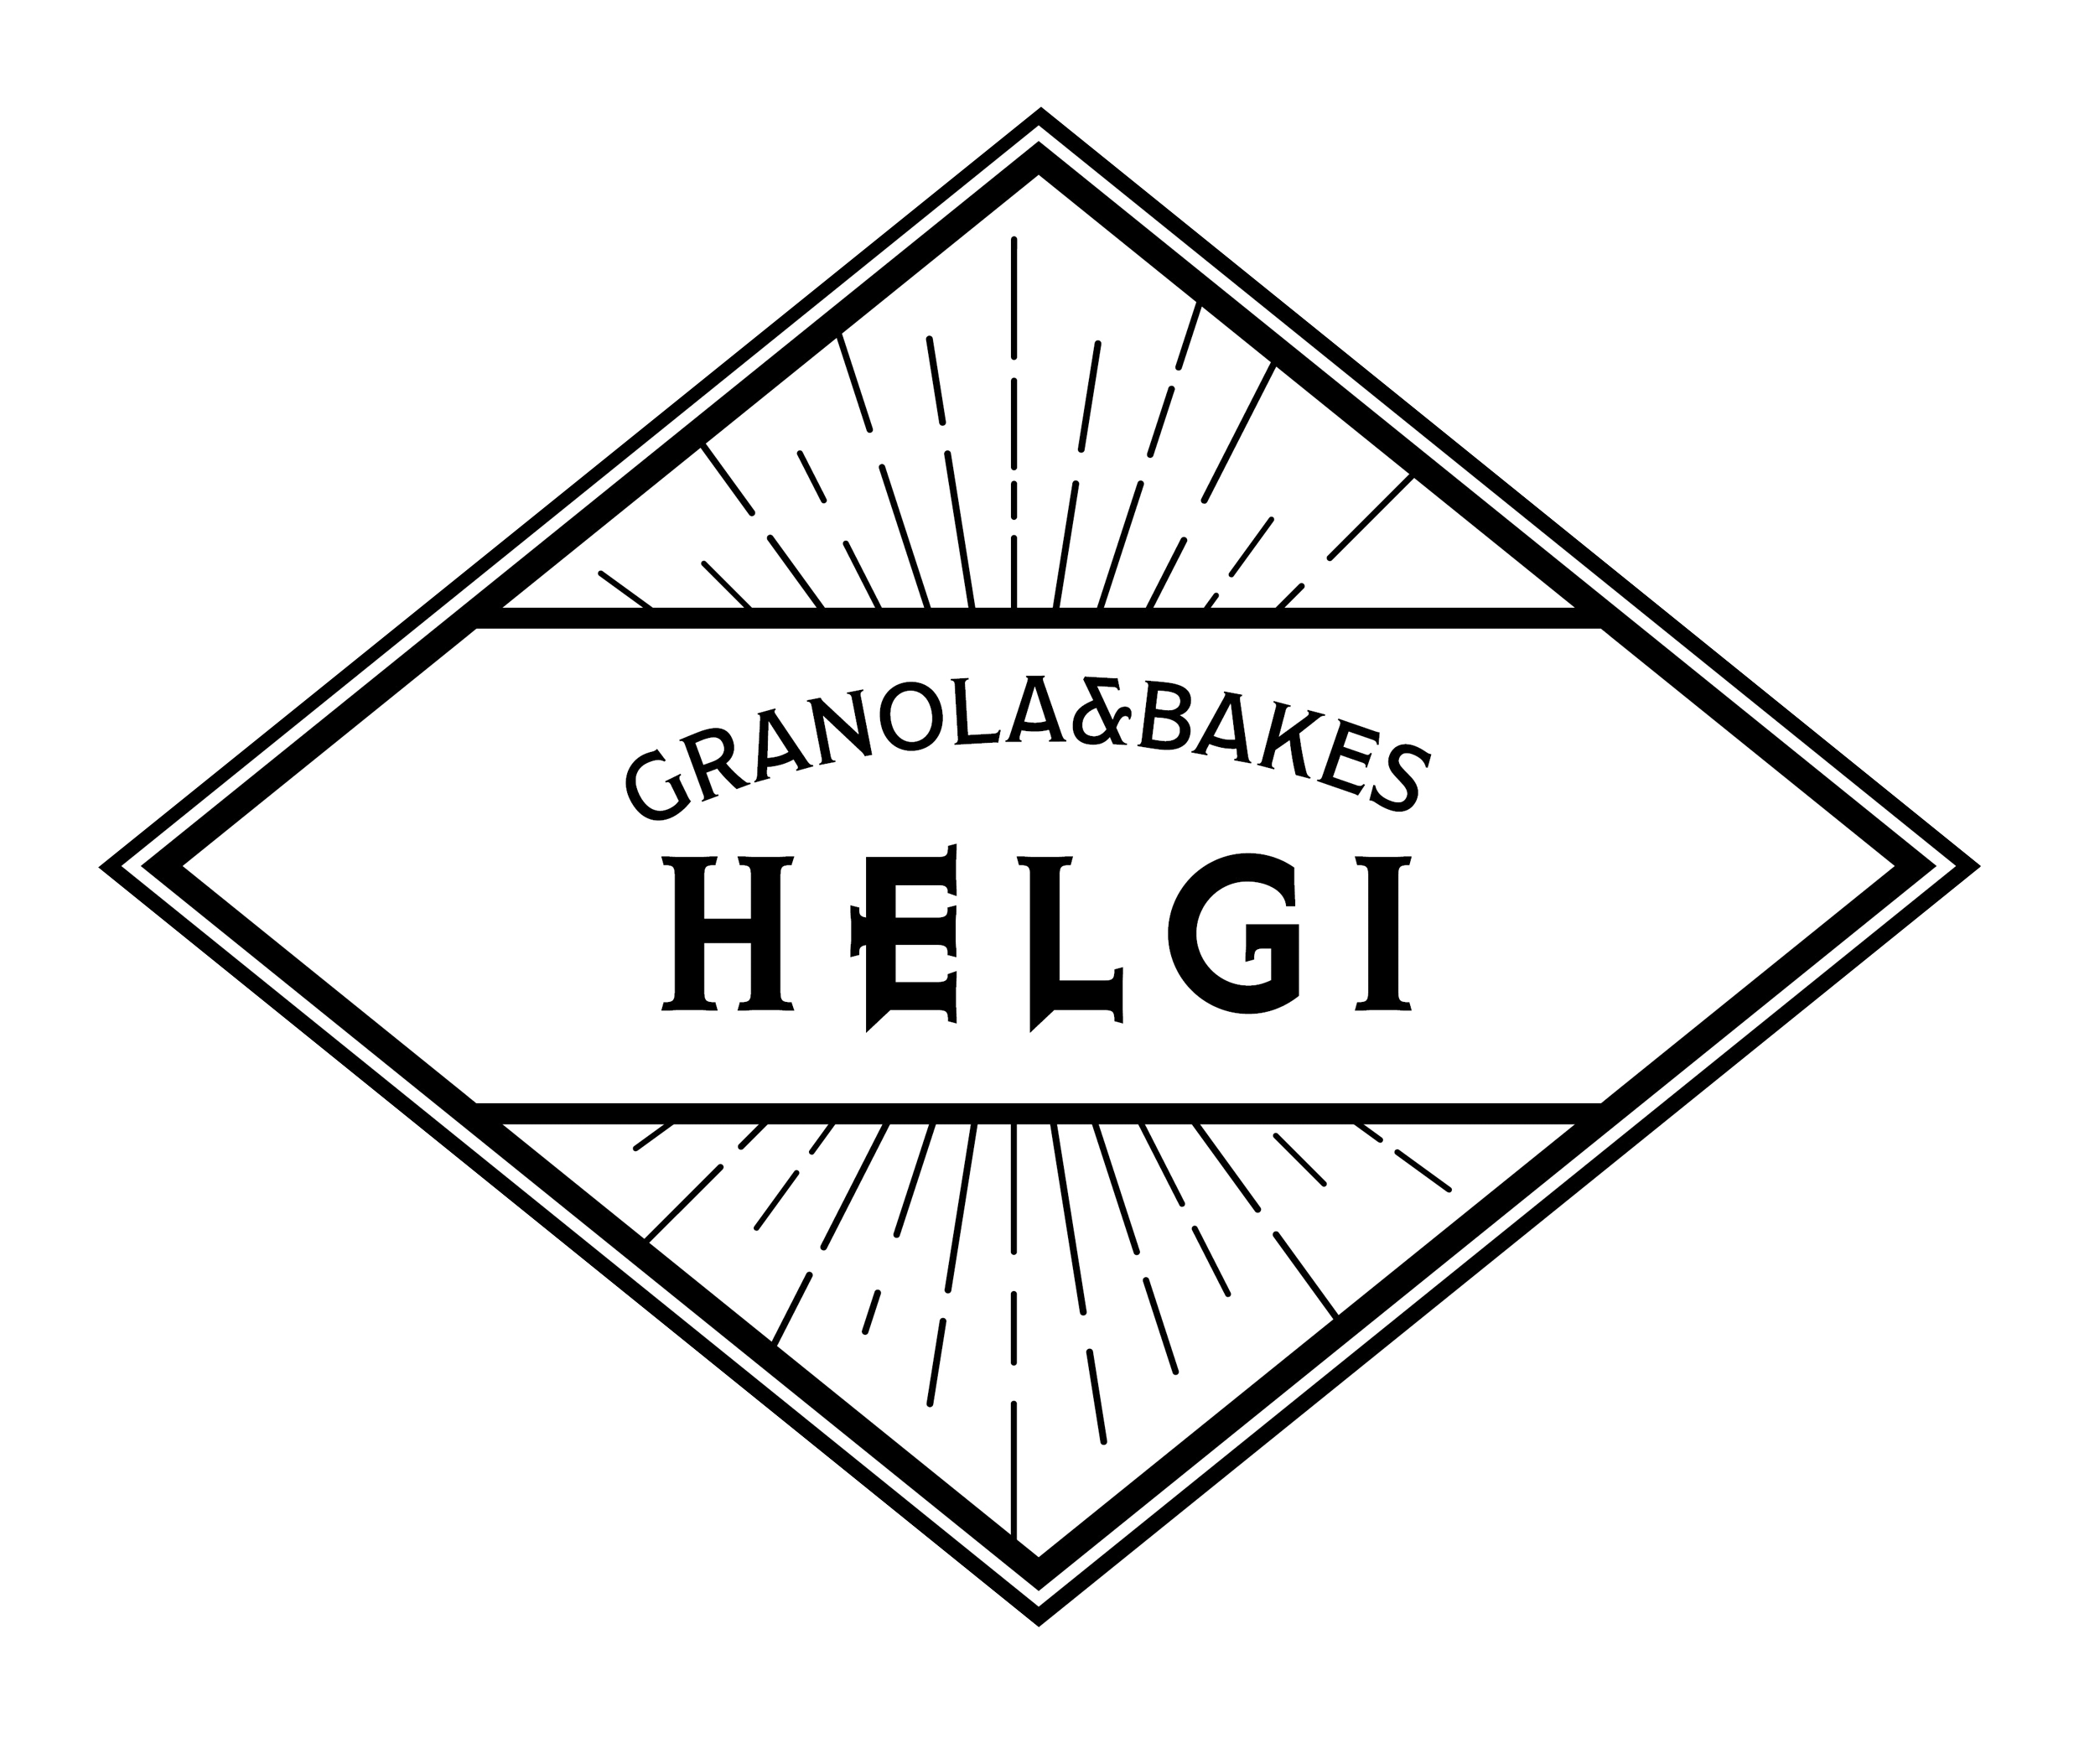 HELGI GRANOLA&BAKES